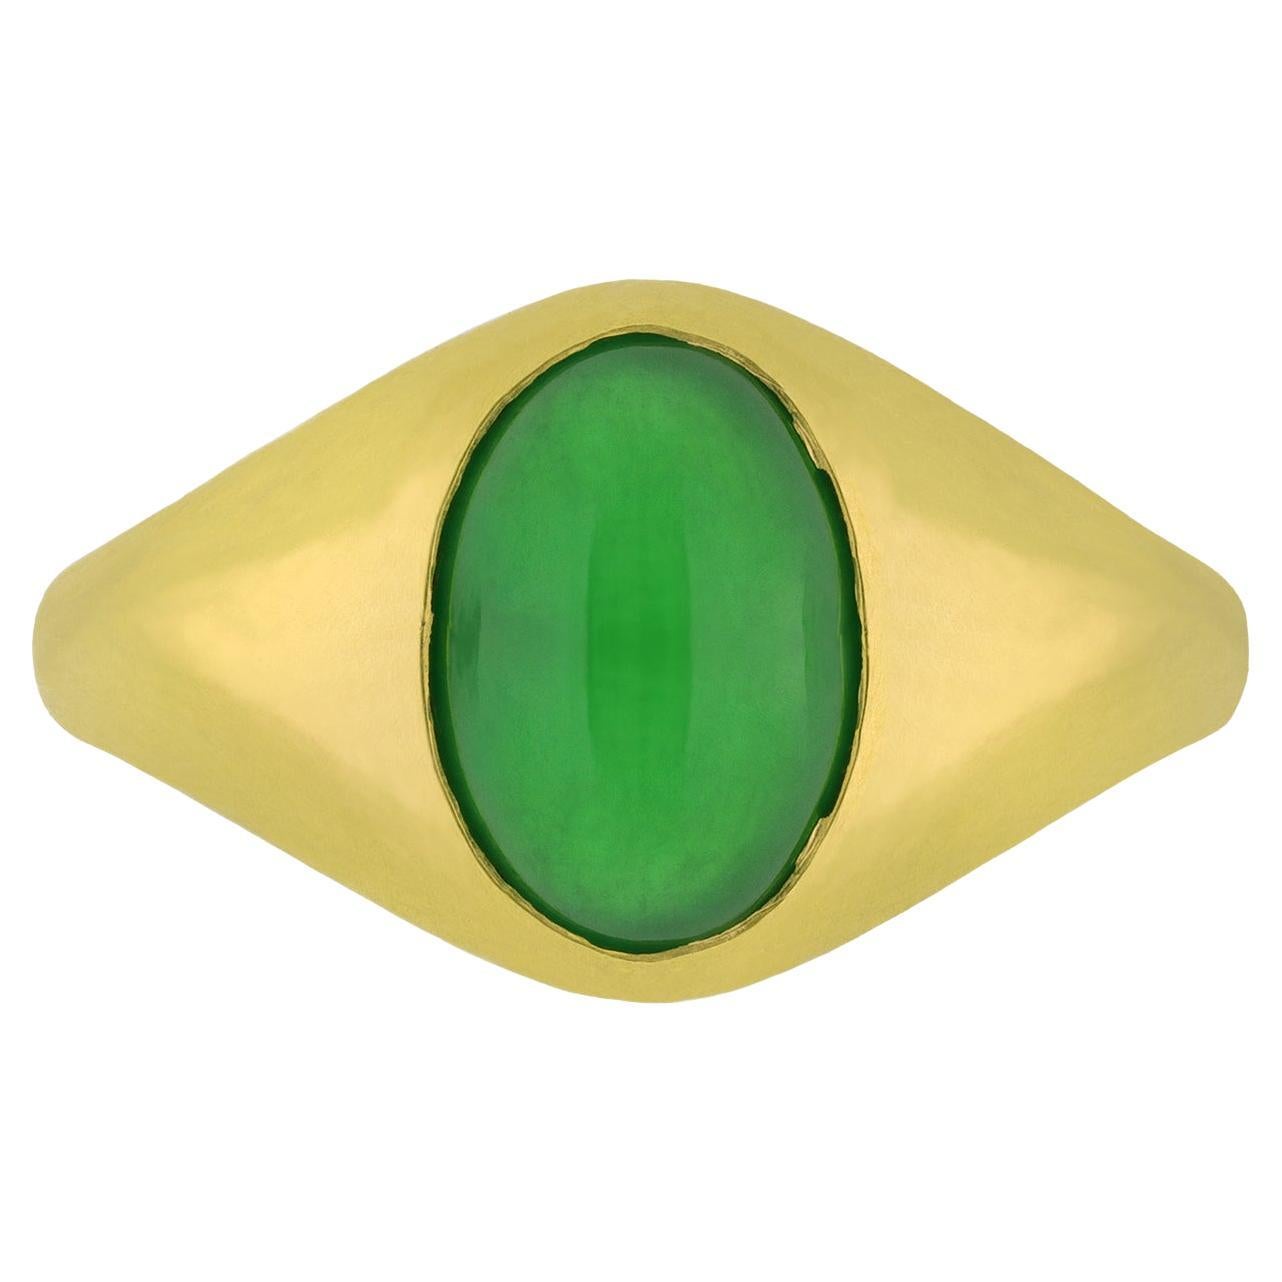 Type-A jade ring, circa 1970.